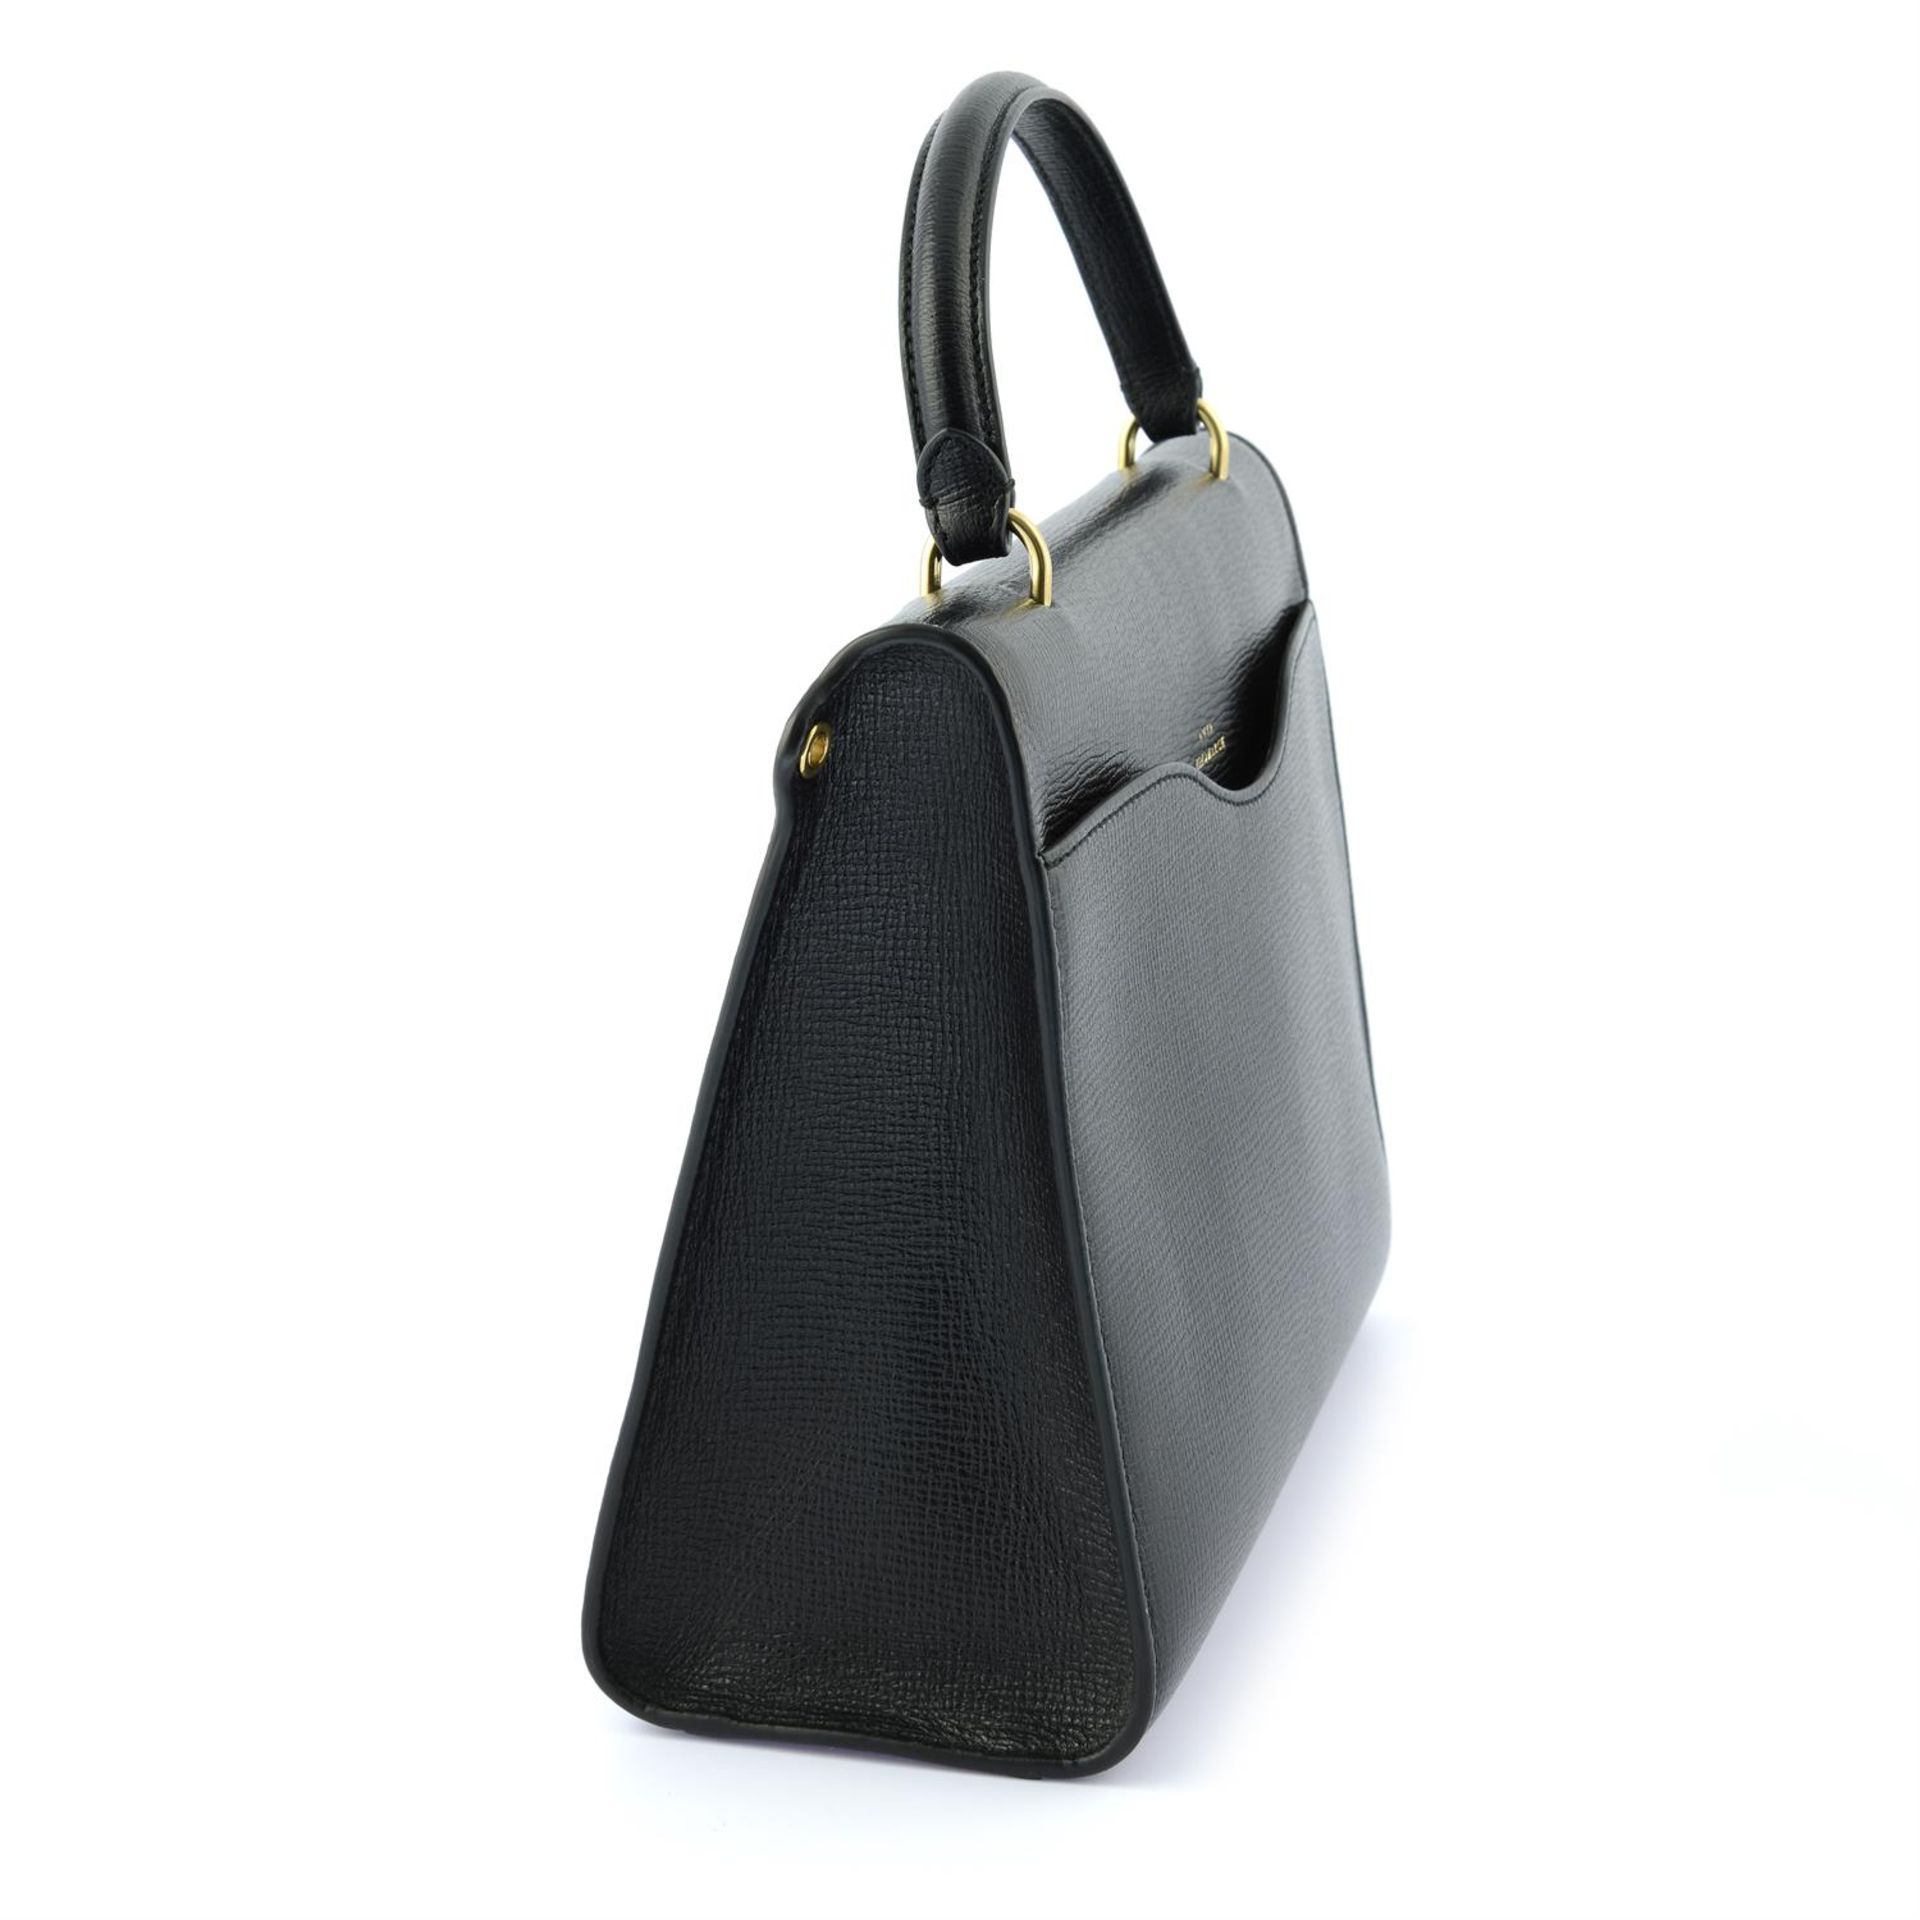 ANYA HINDMARCH - a black leather handbag. - Image 3 of 5